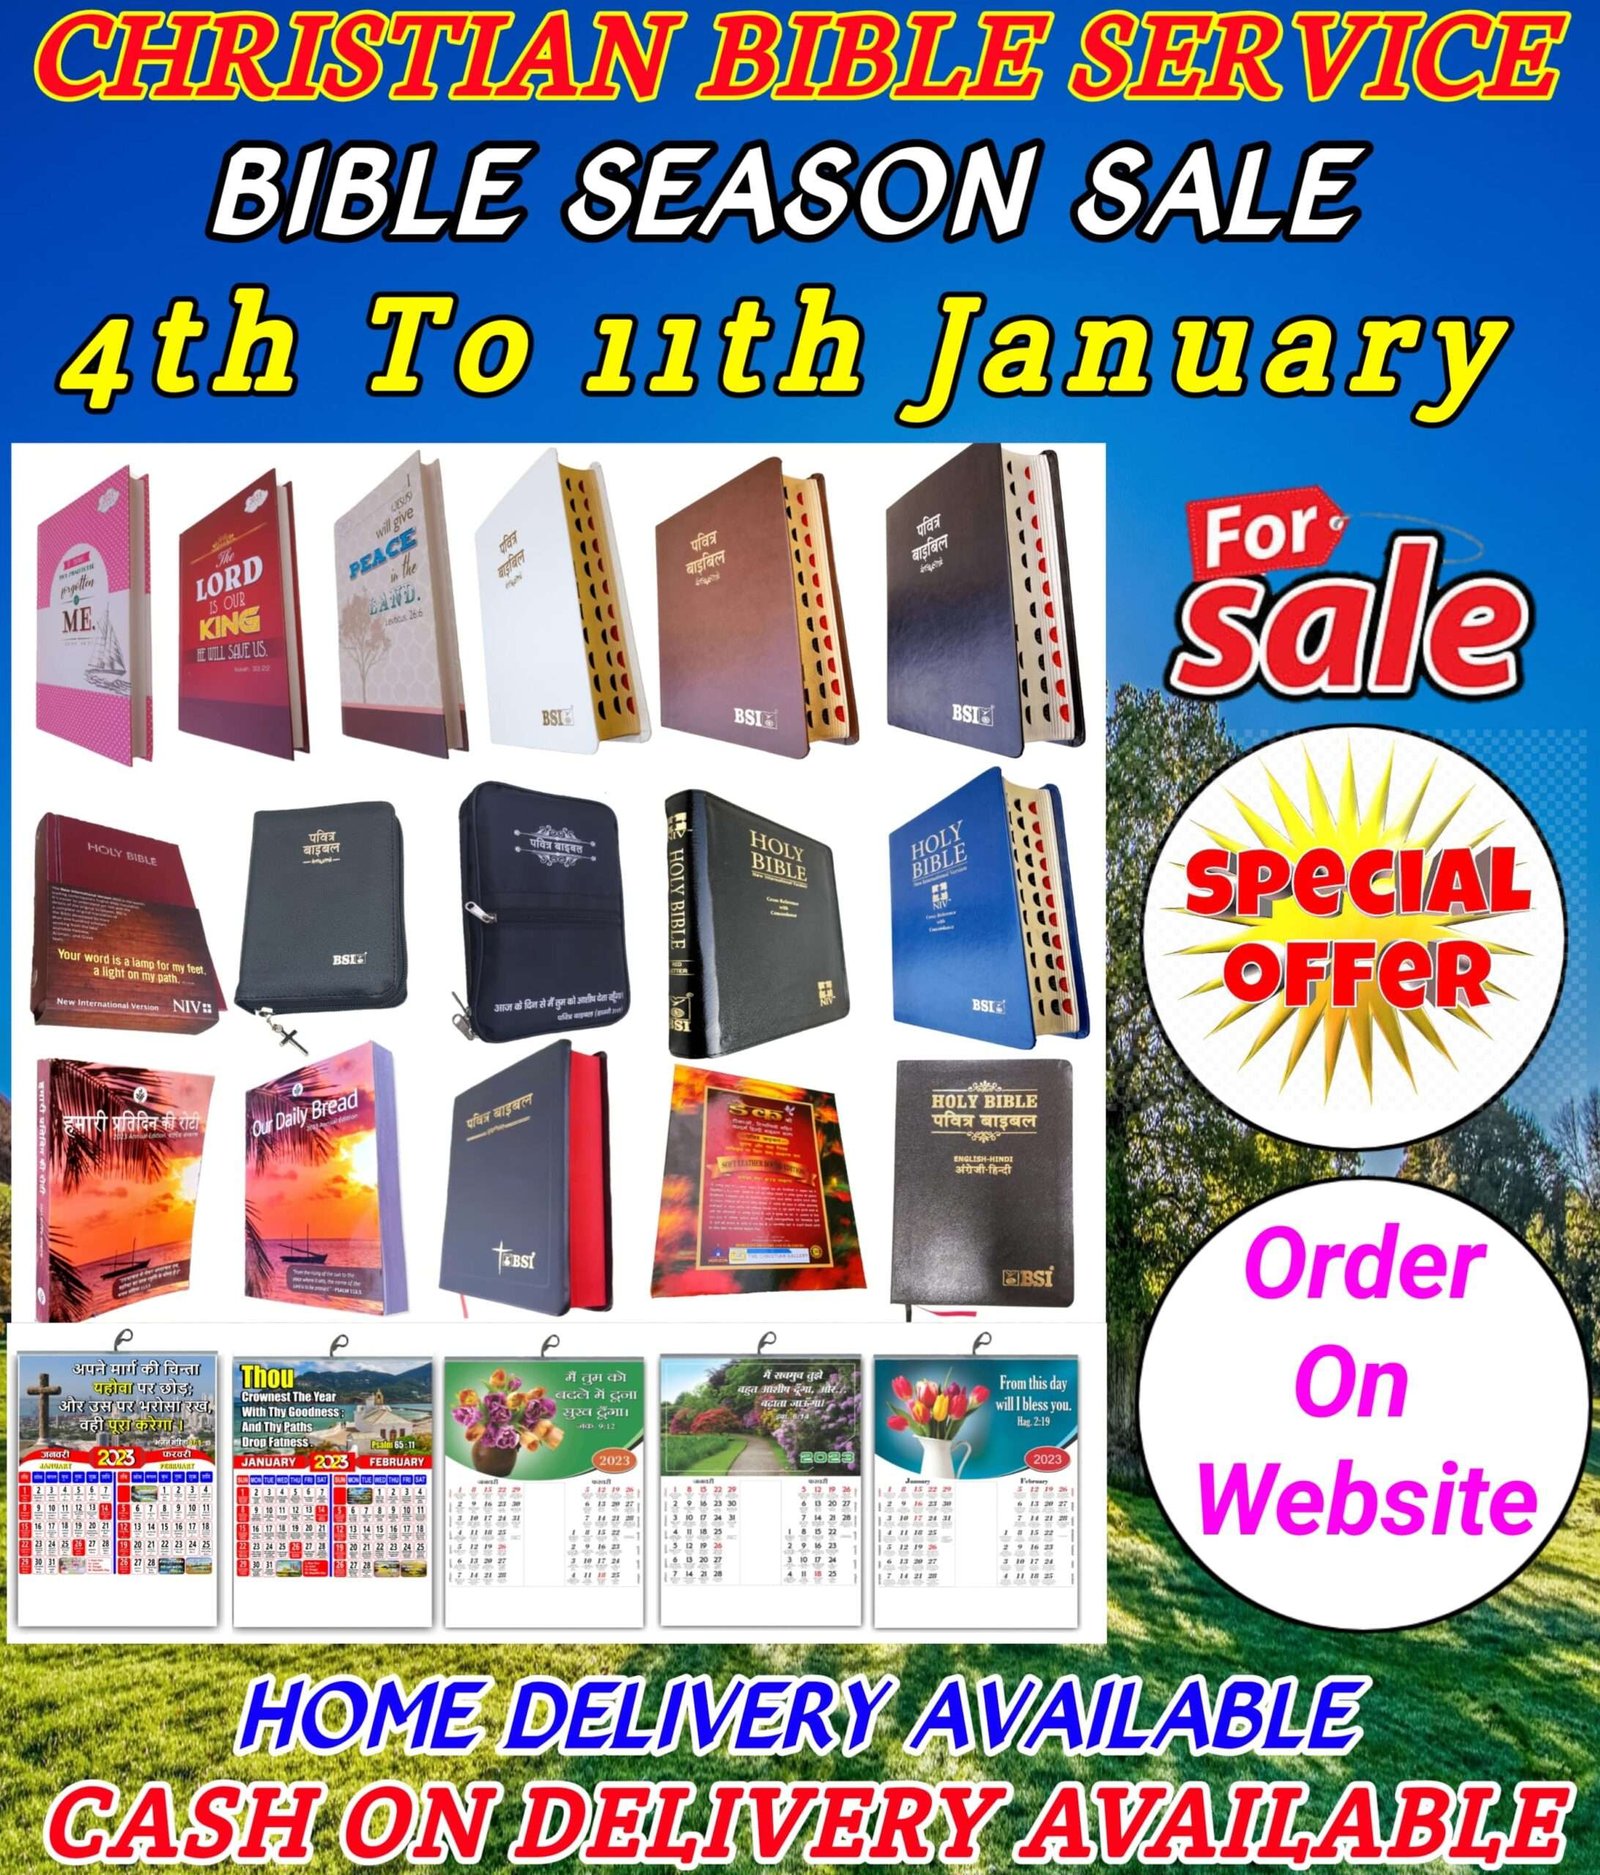 BIBLE SEASON SALE 4th To 11th January